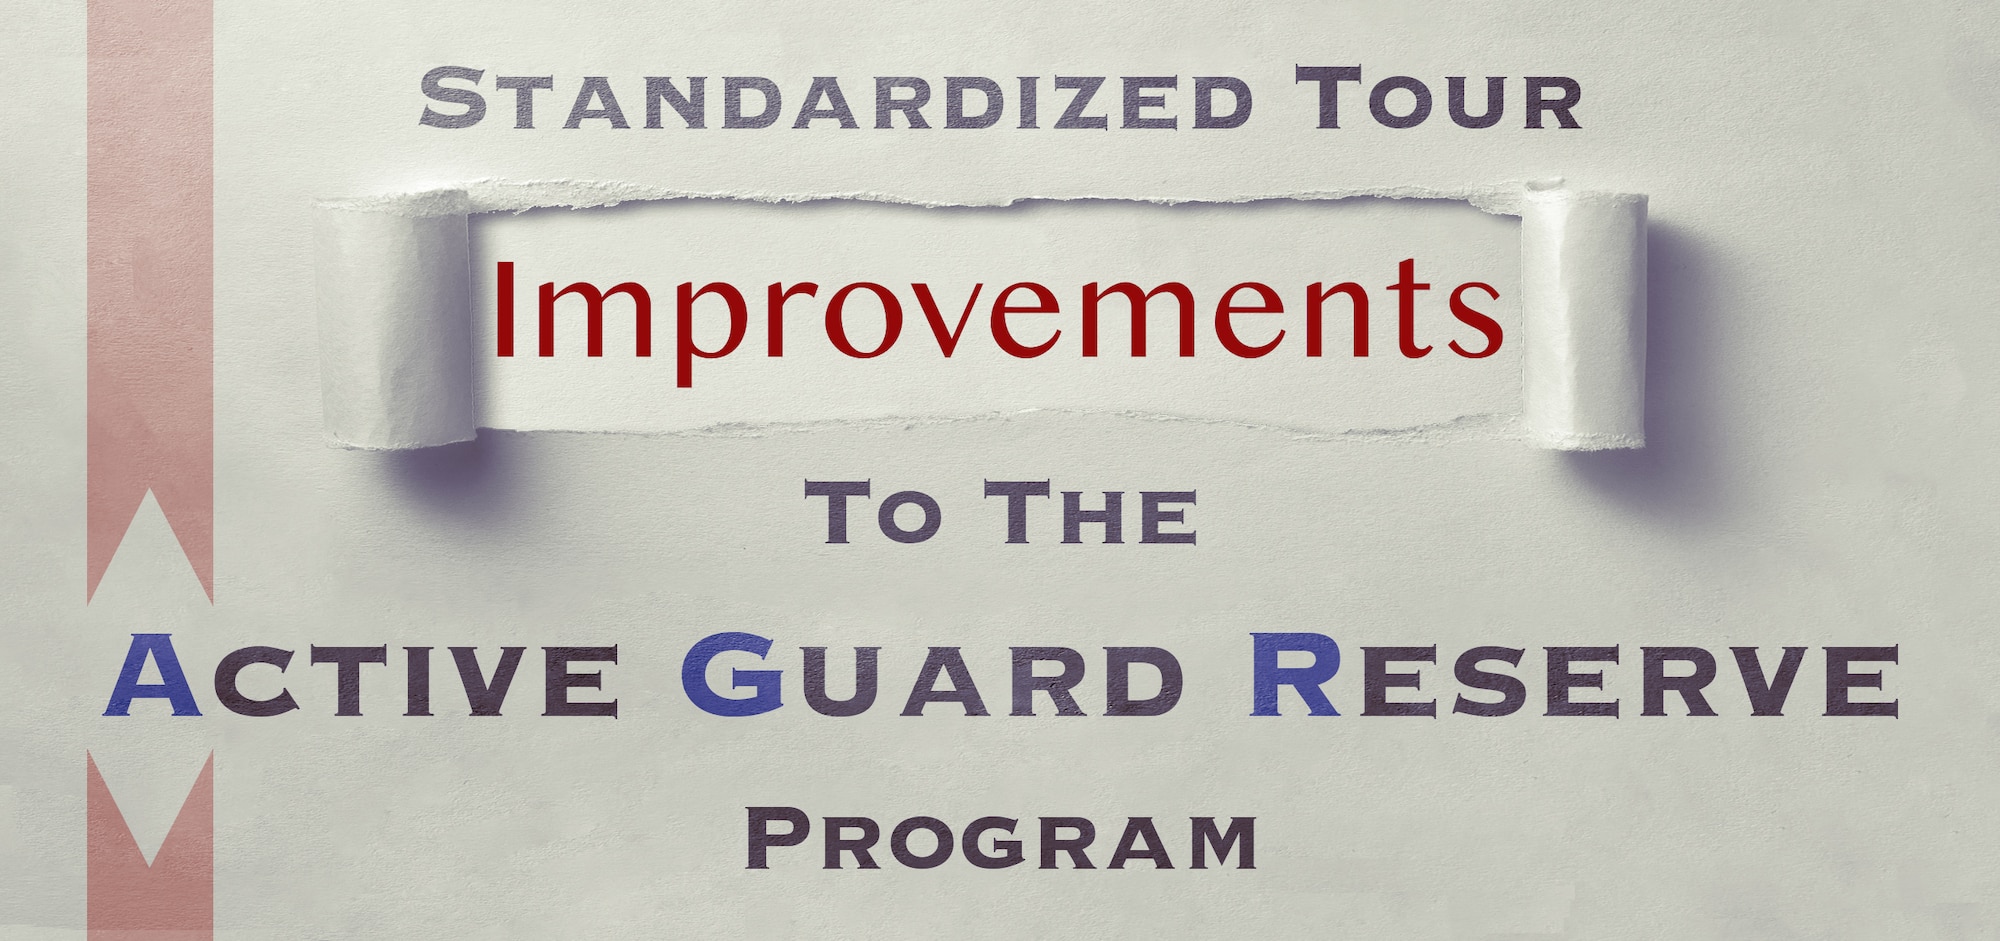 Air Force Reserve Command standardizes AGR program tours